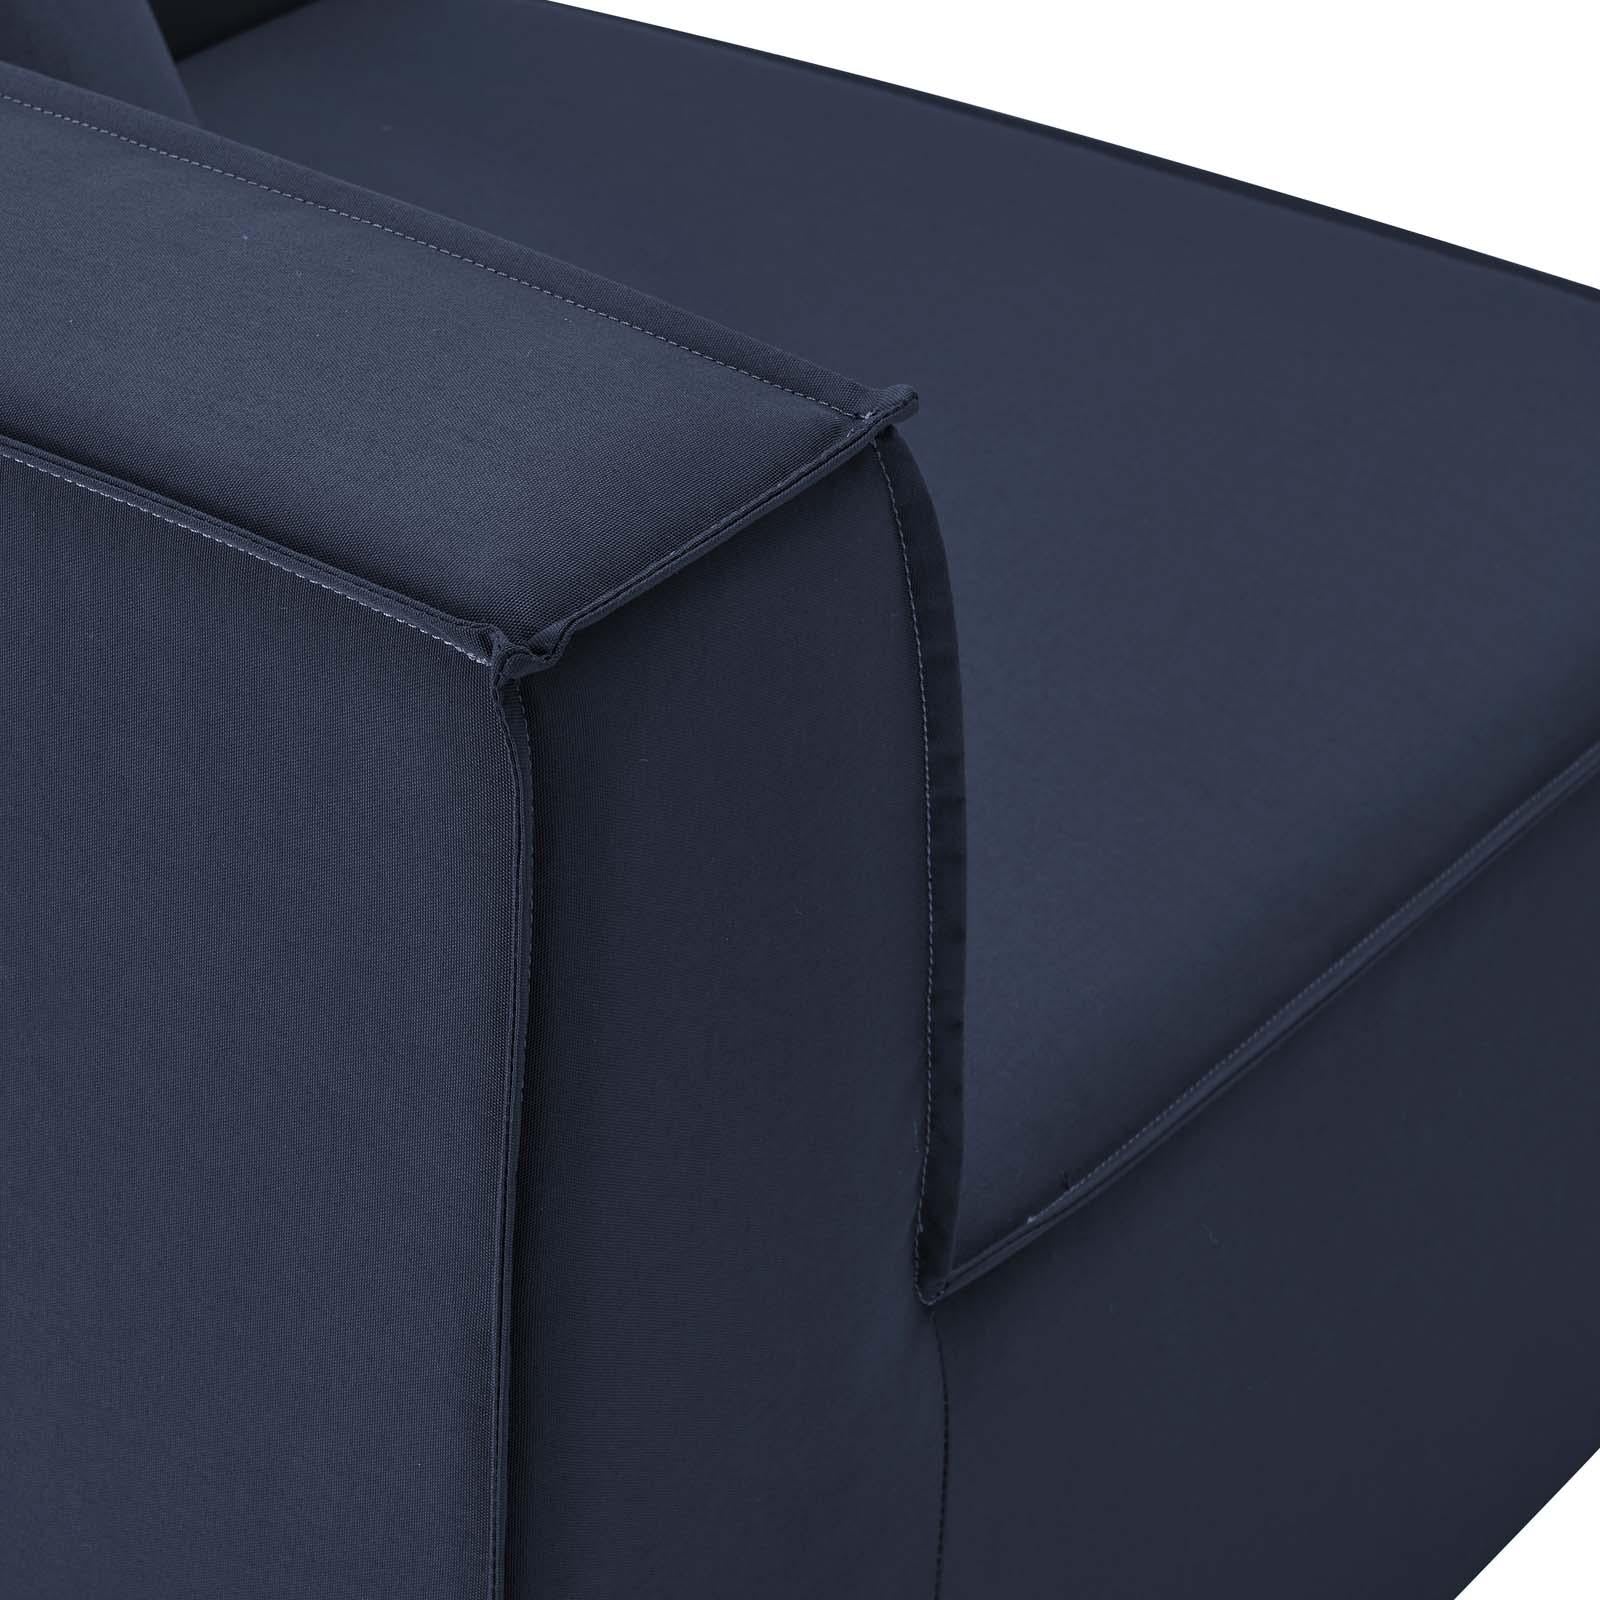 Modway Furniture Modern Saybrook Outdoor Patio Upholstered 2-Piece Sectional Sofa Loveseat - EEI-4377